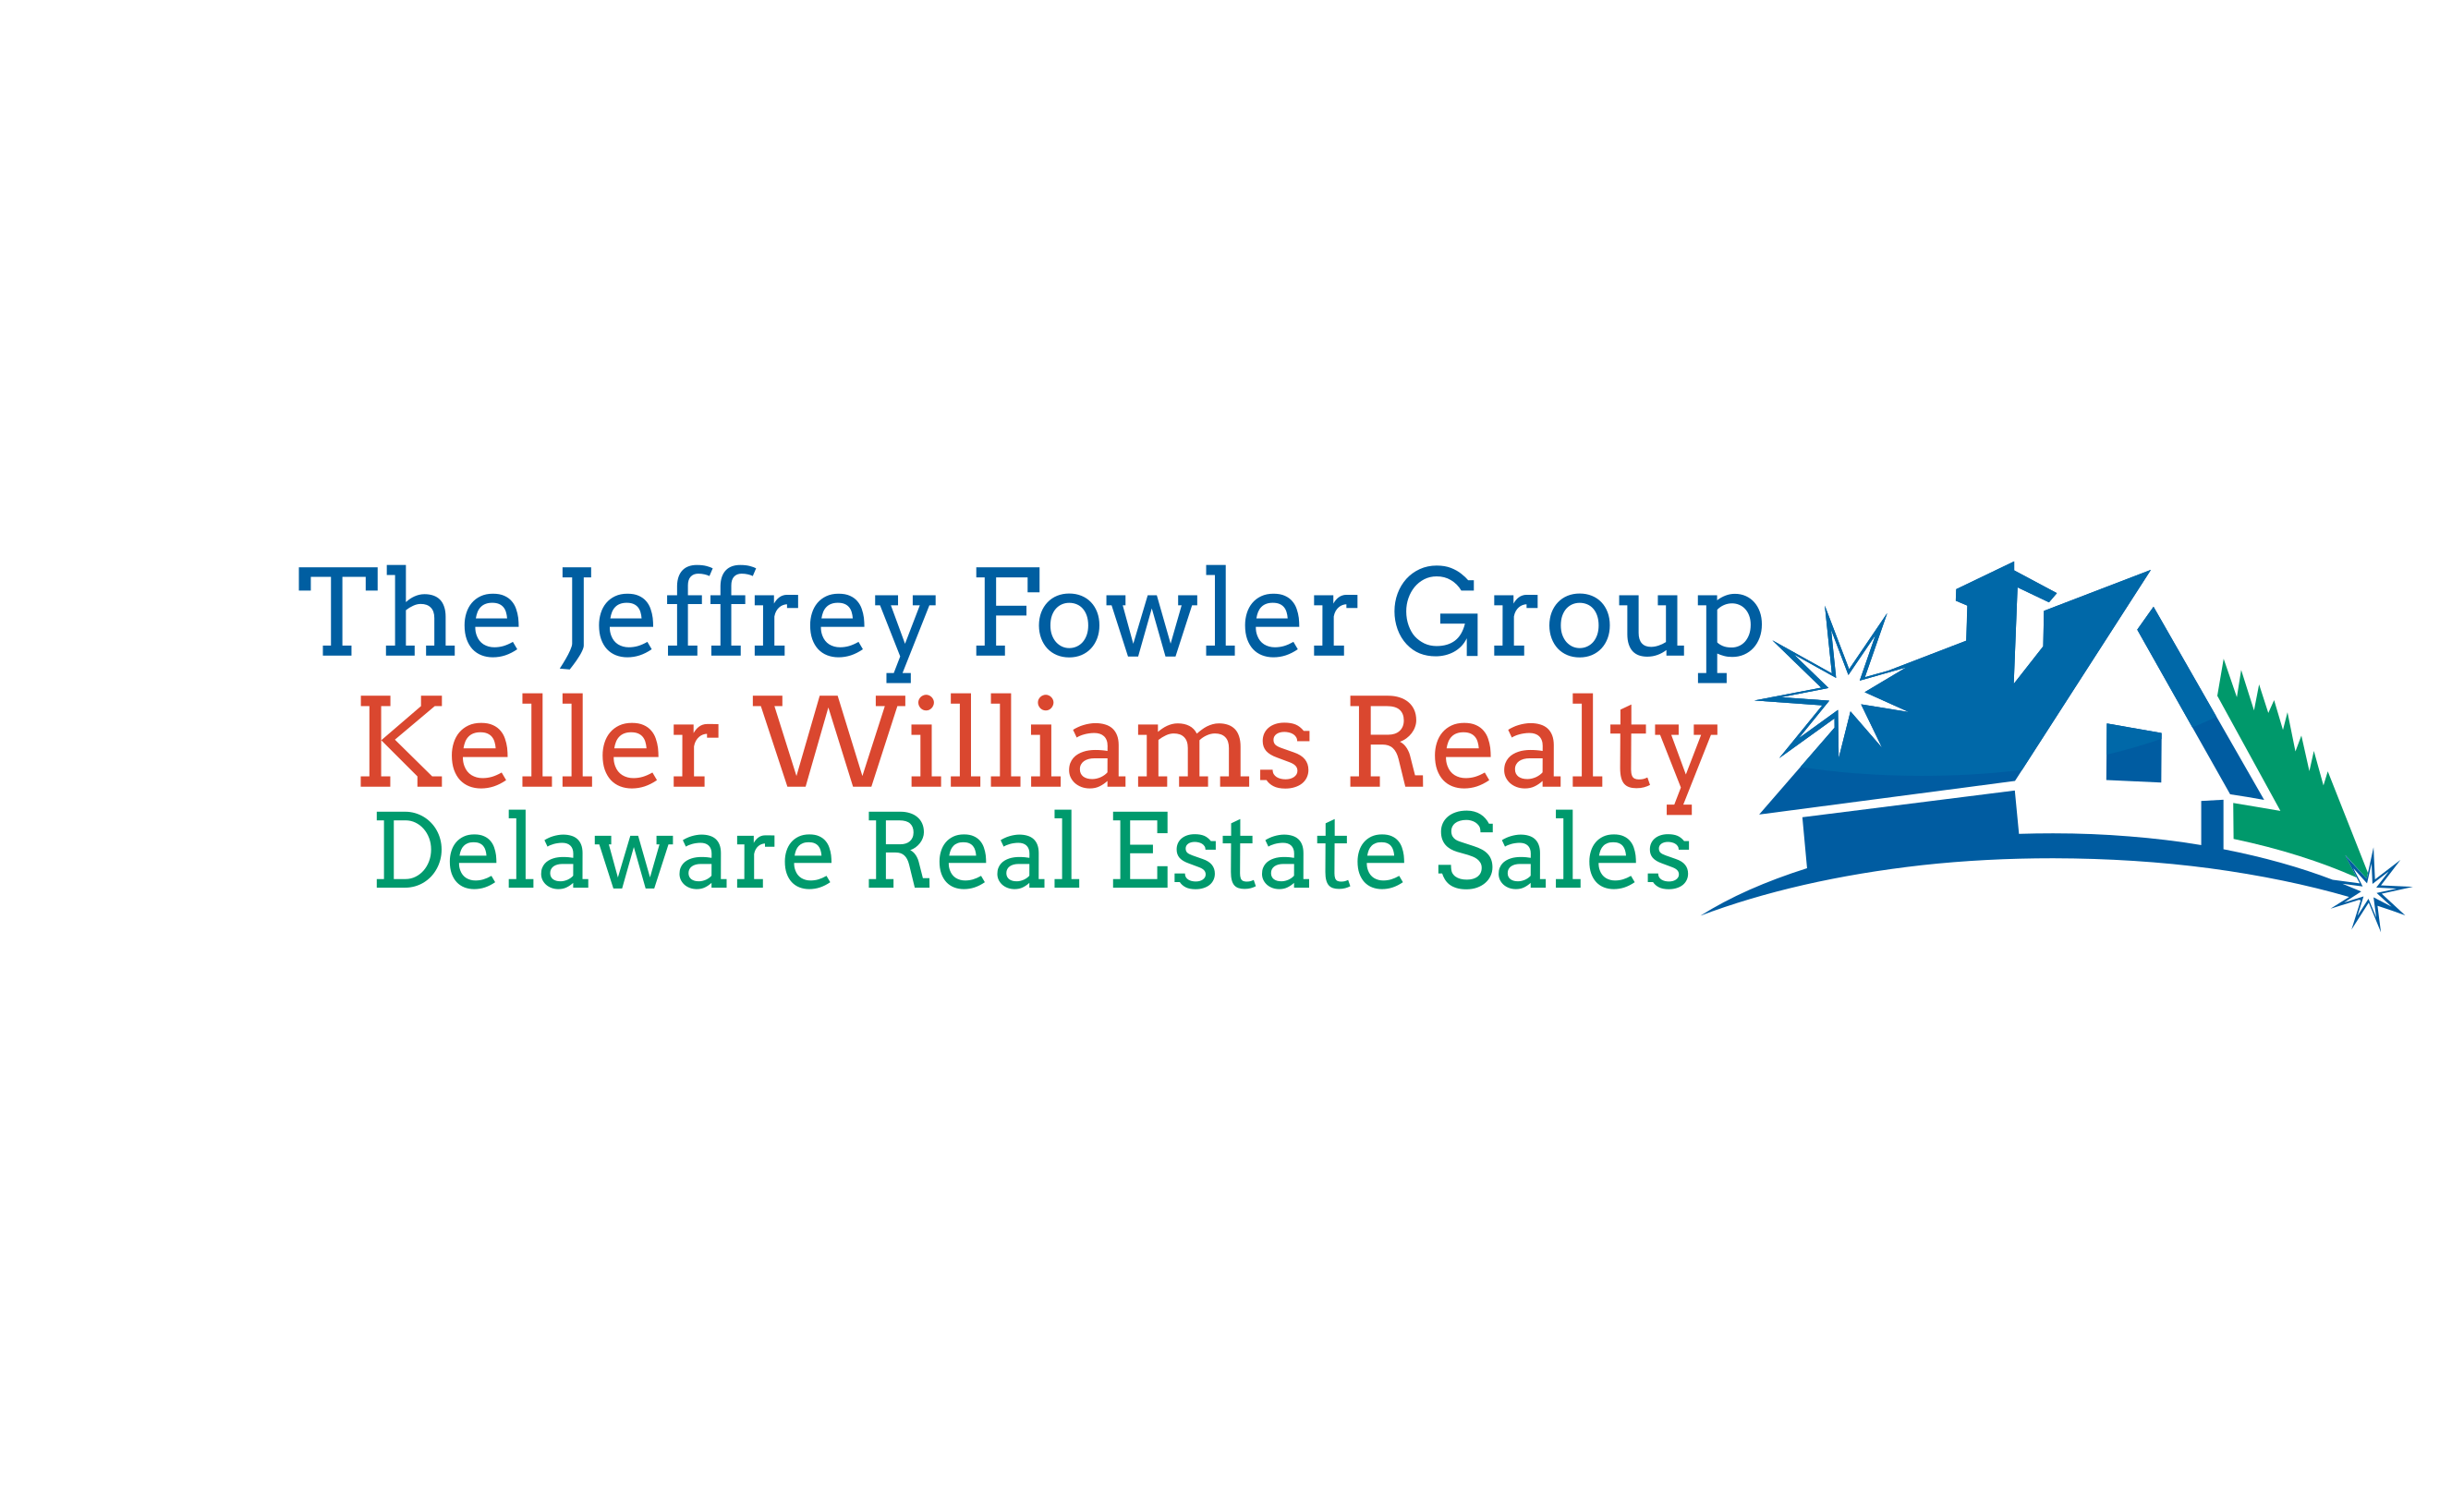 Jeffrey Fowler Group, Keller Williams Reality